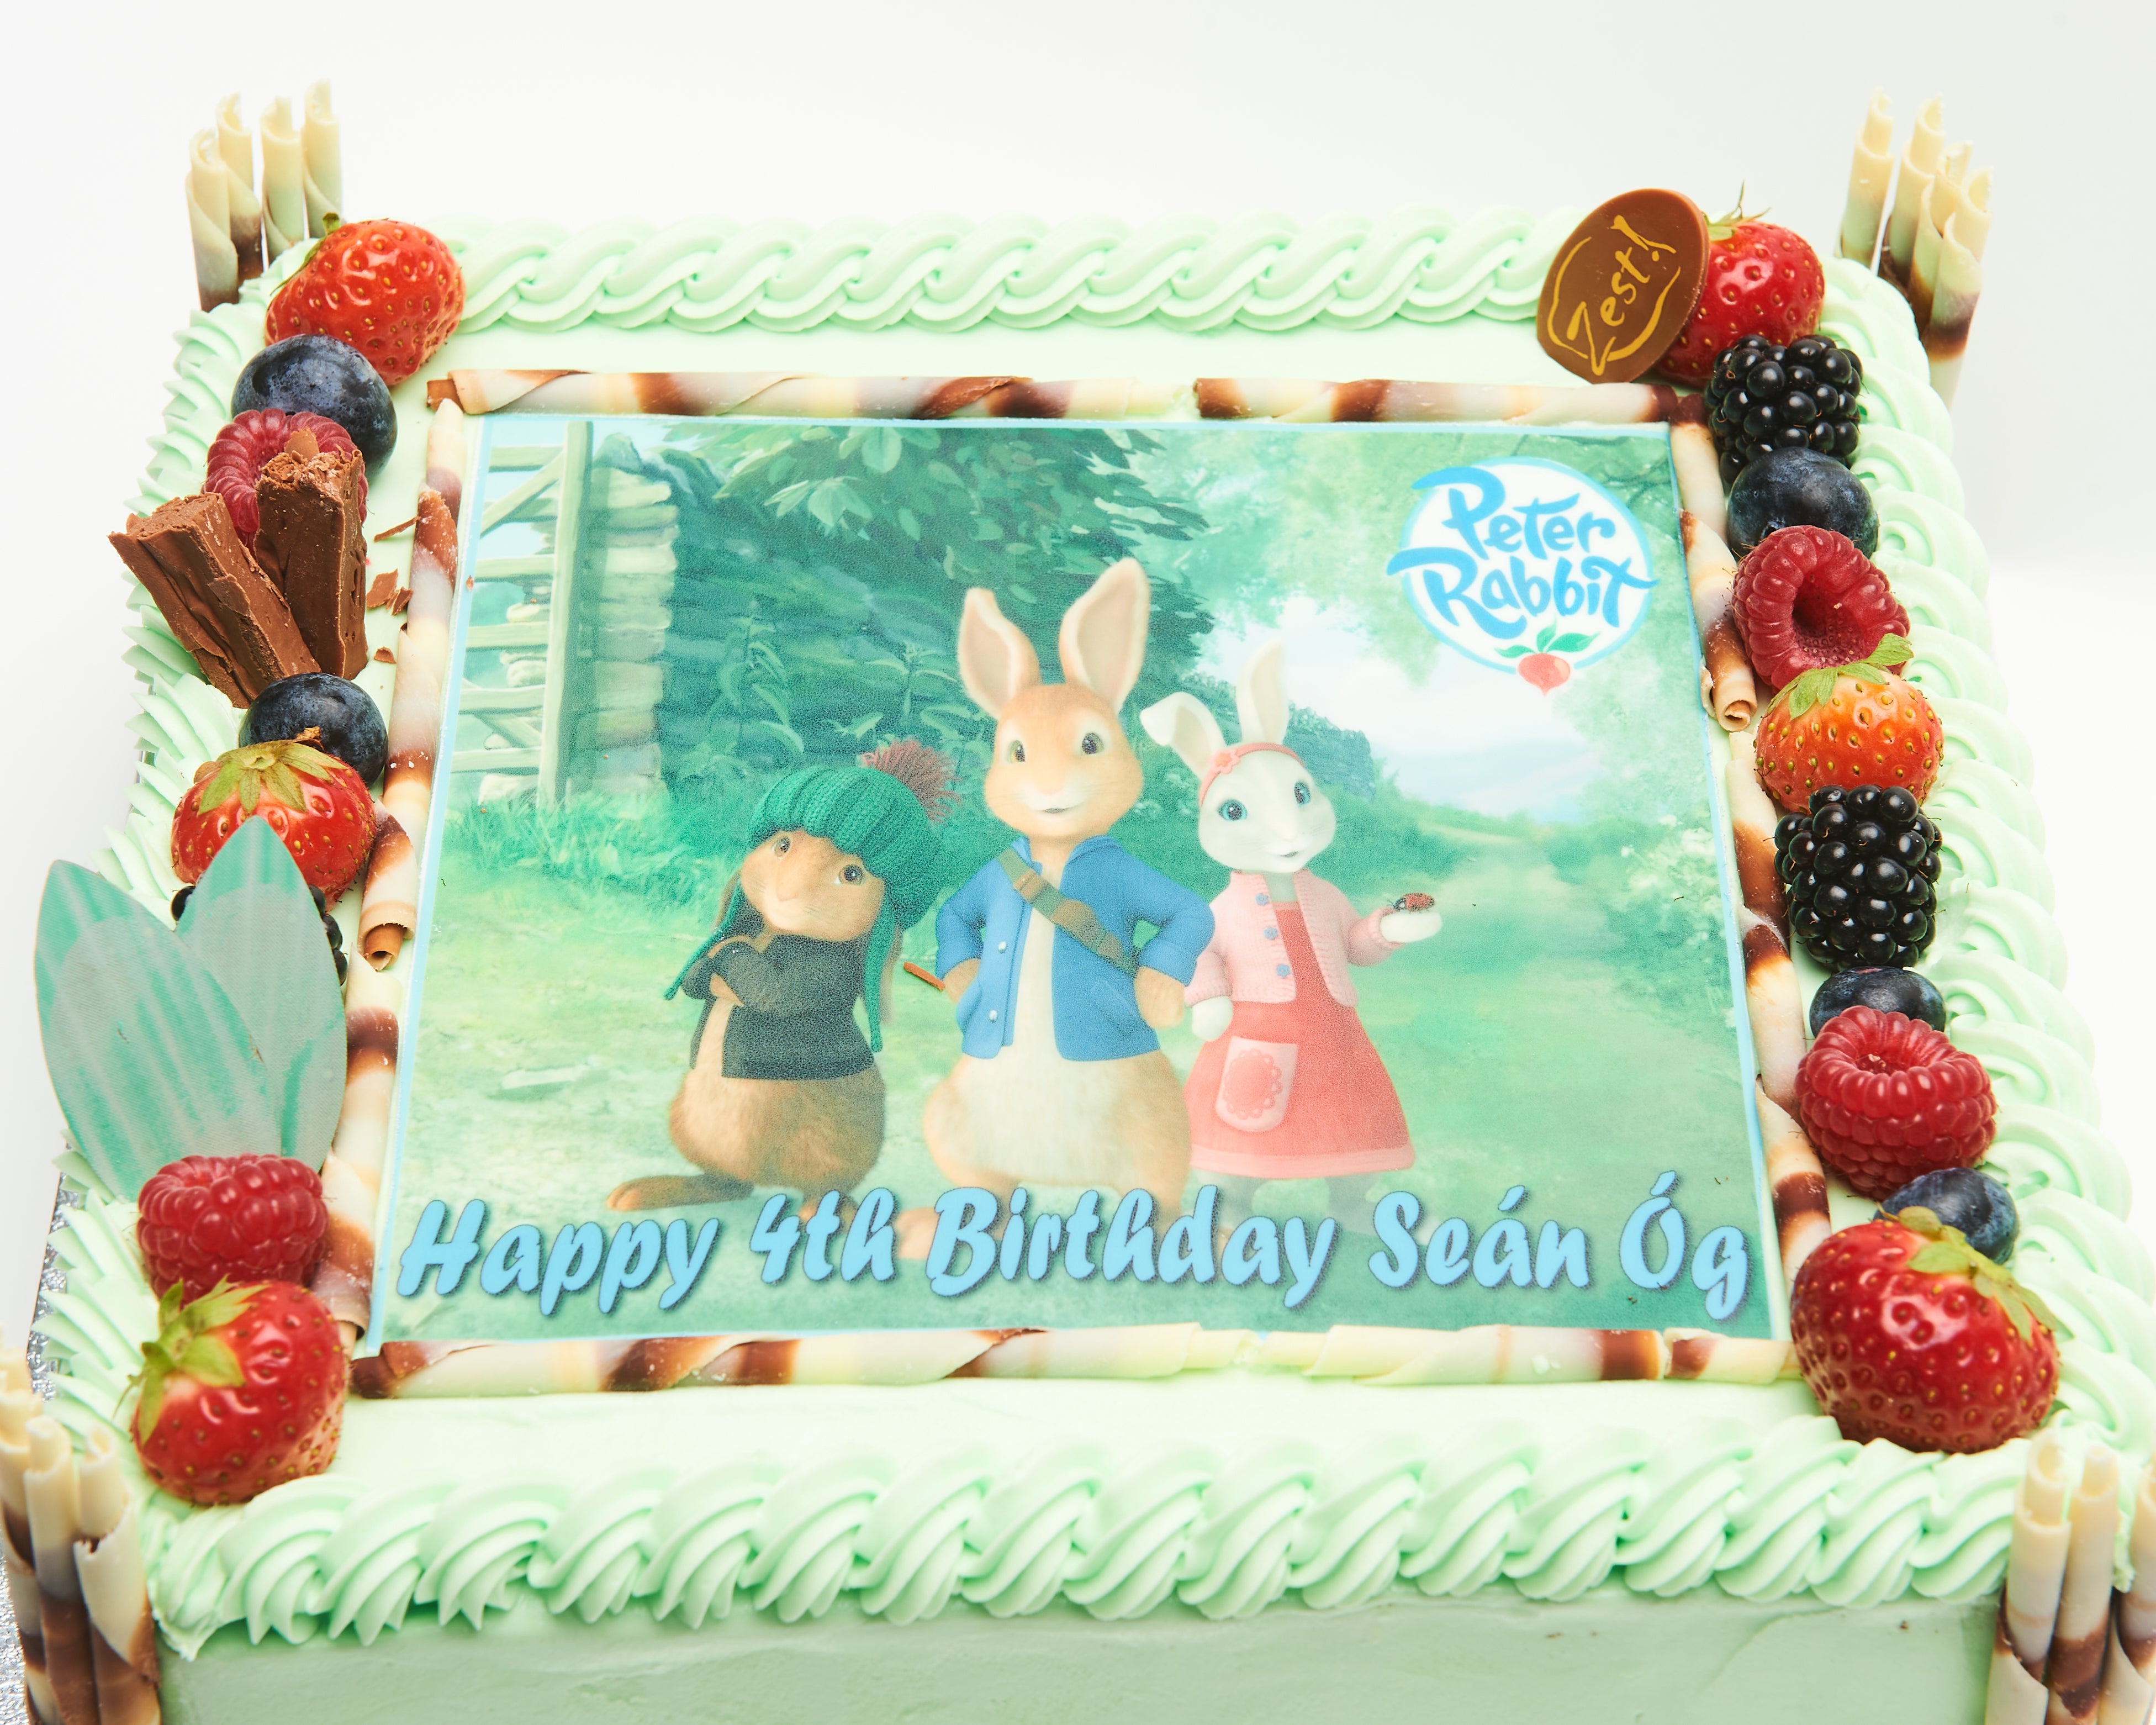 Tom Birthday Cake-Enjoy your favourite cartoon cake in Lahore